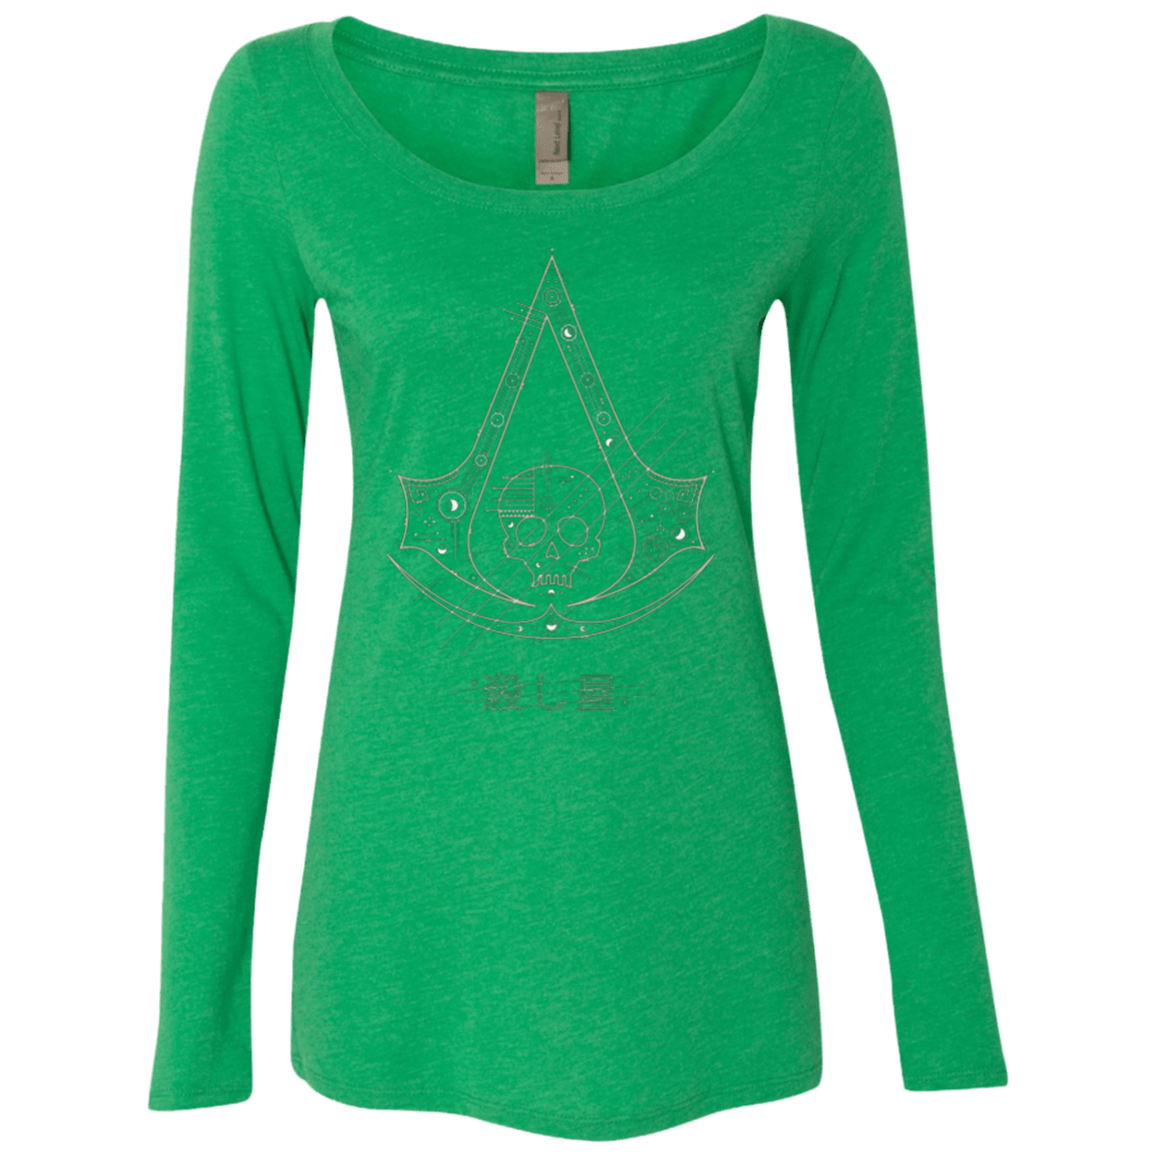 T-Shirts Envy / Small Tech Creed Women's Triblend Long Sleeve Shirt